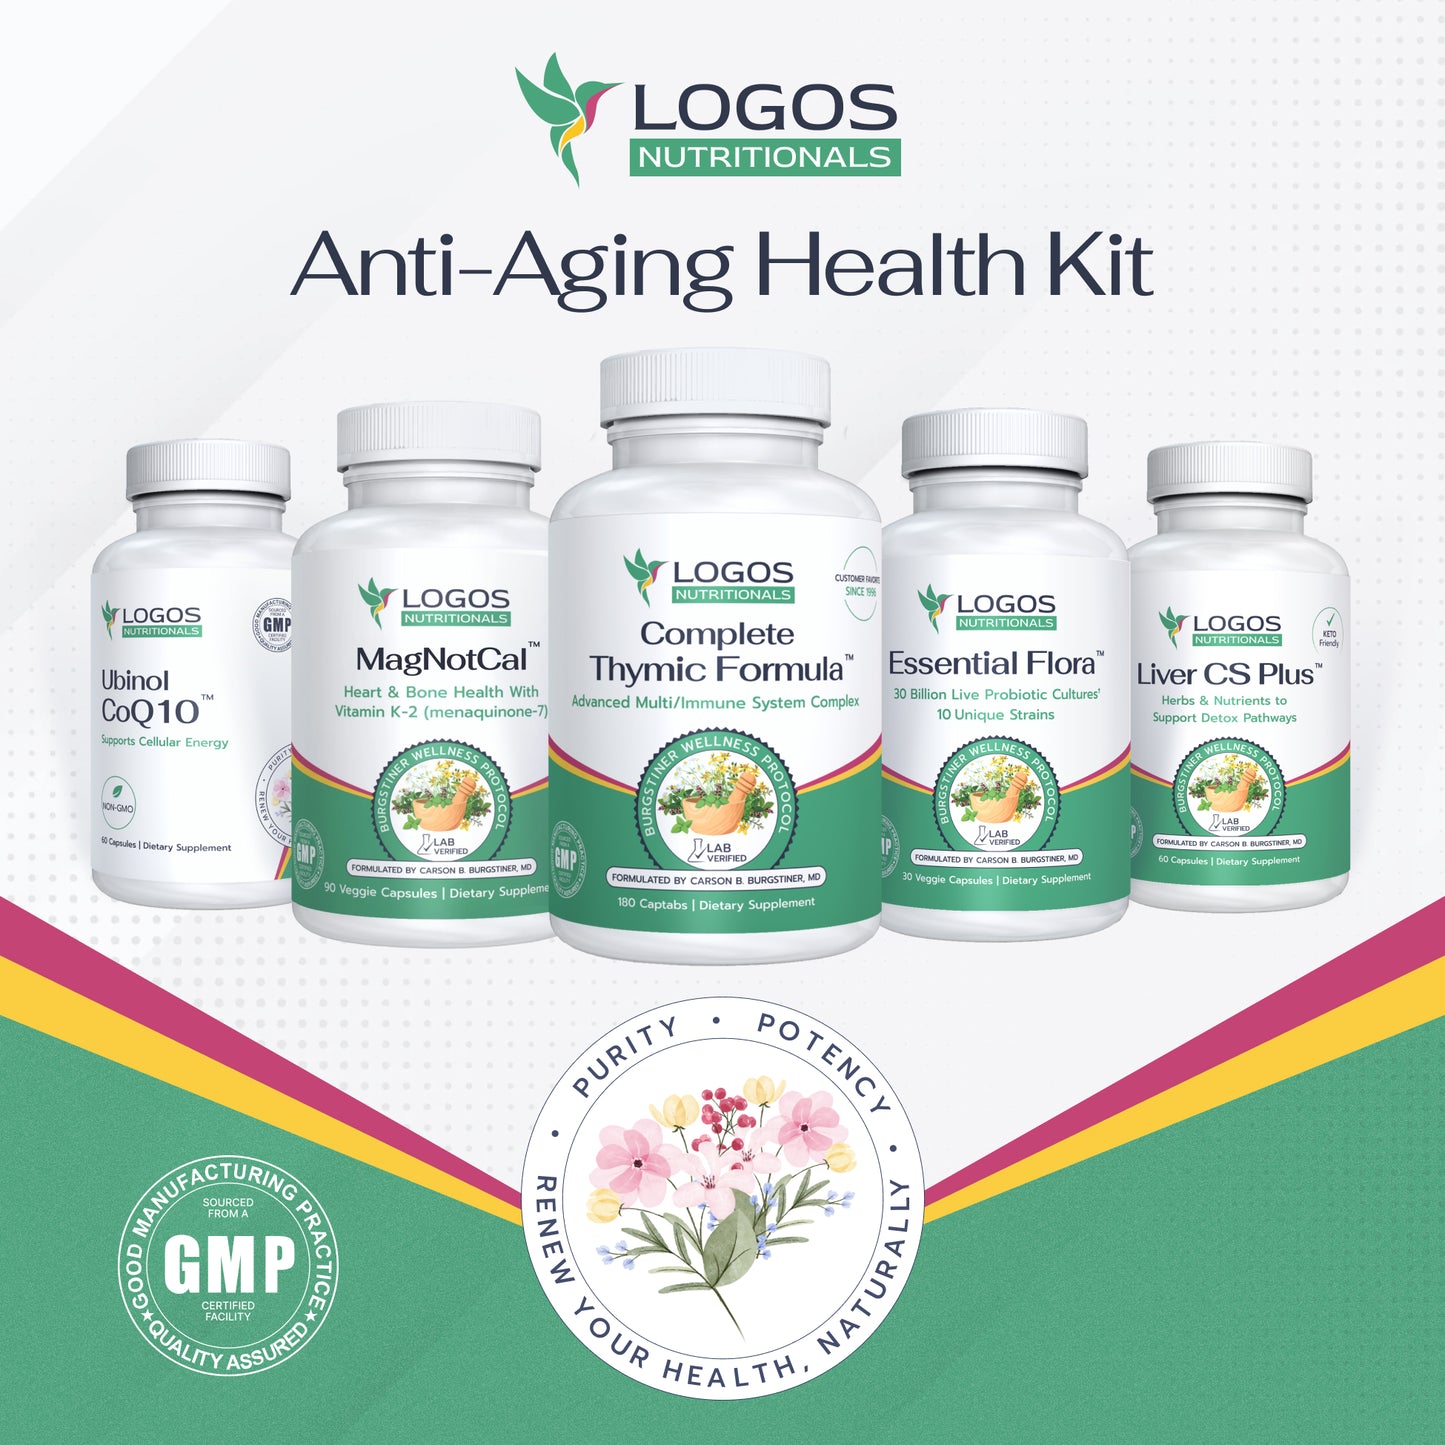 Anti-Aging Health Kit